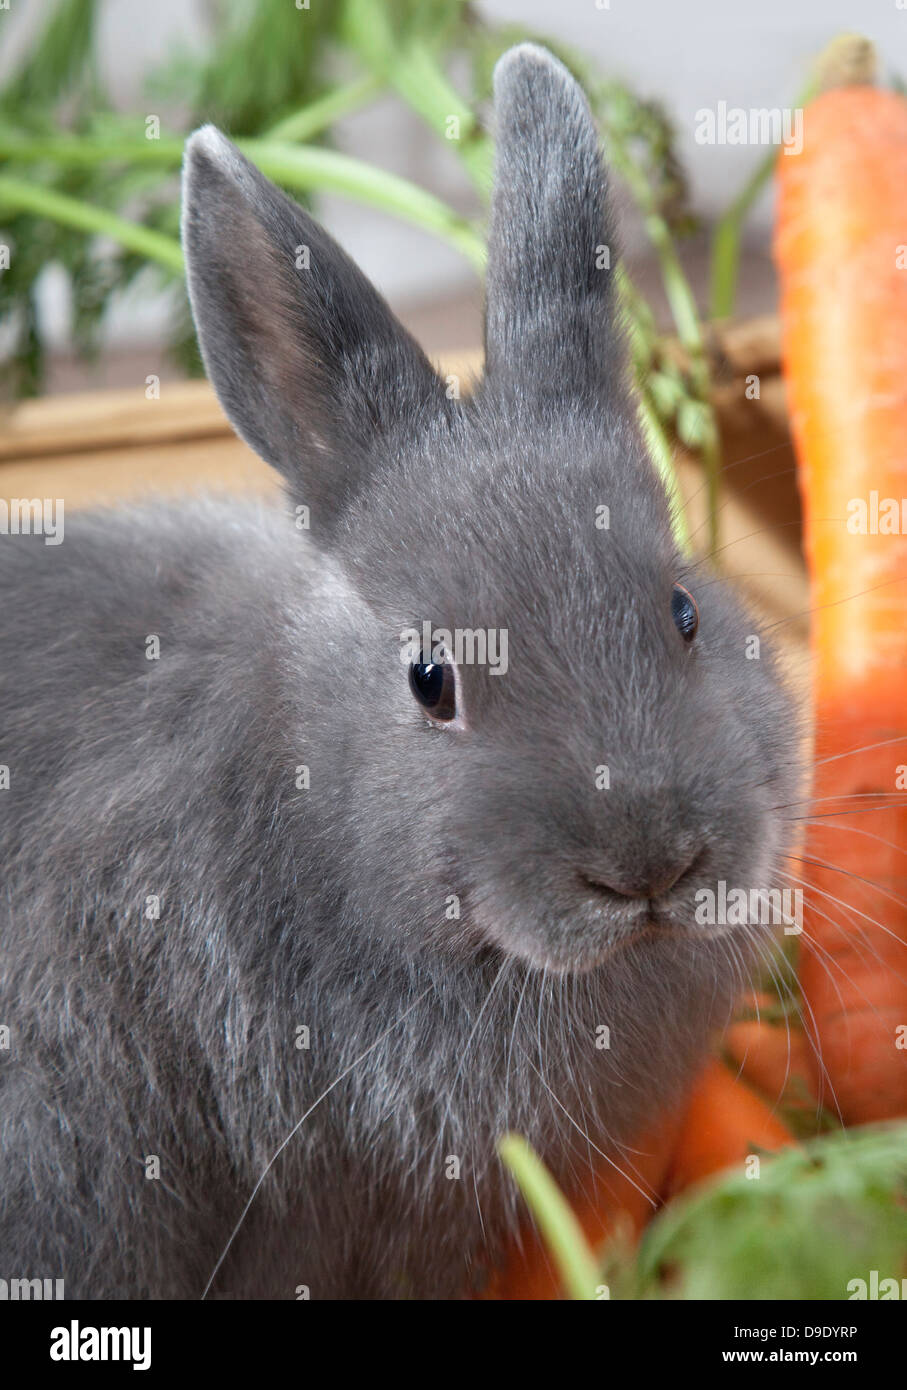 Cute gray bunny with carrots looking at camera Stock Photo